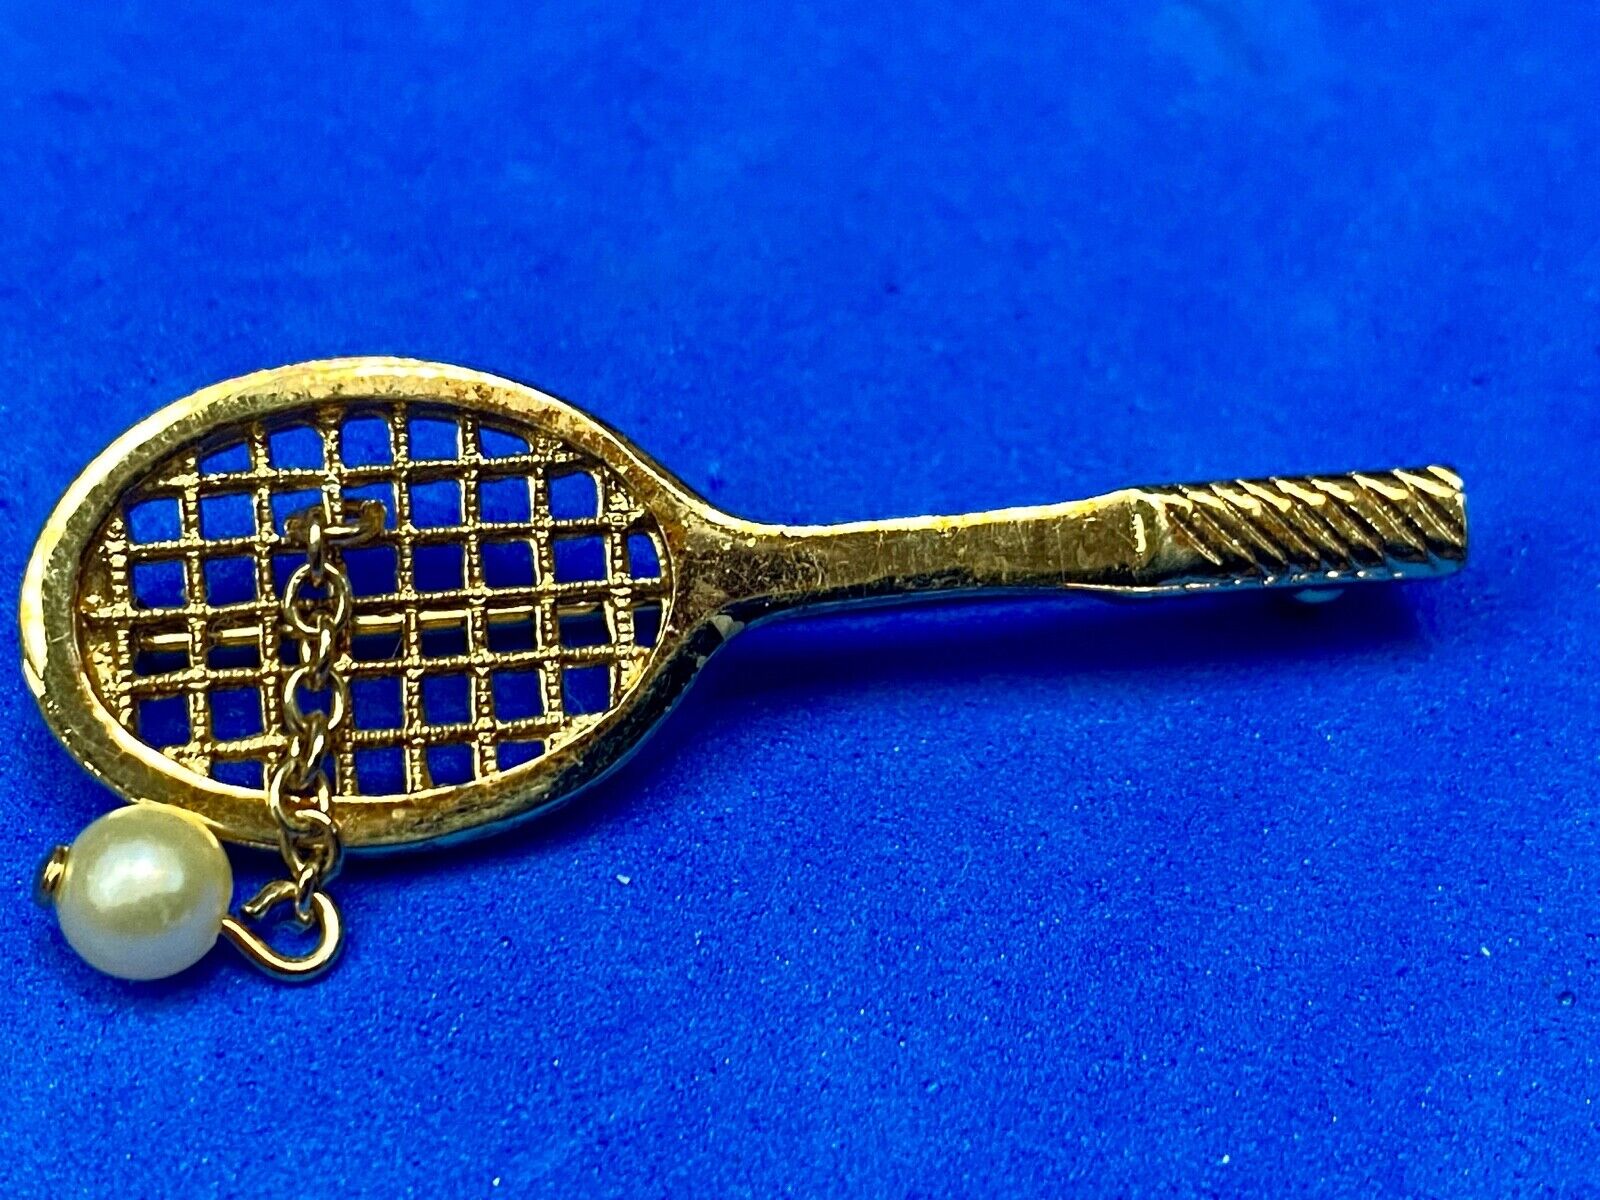 Vintage Avon Jewelry Goldtone Tennis Racquet Brooch Faux Pearl Ball, 1 3/4